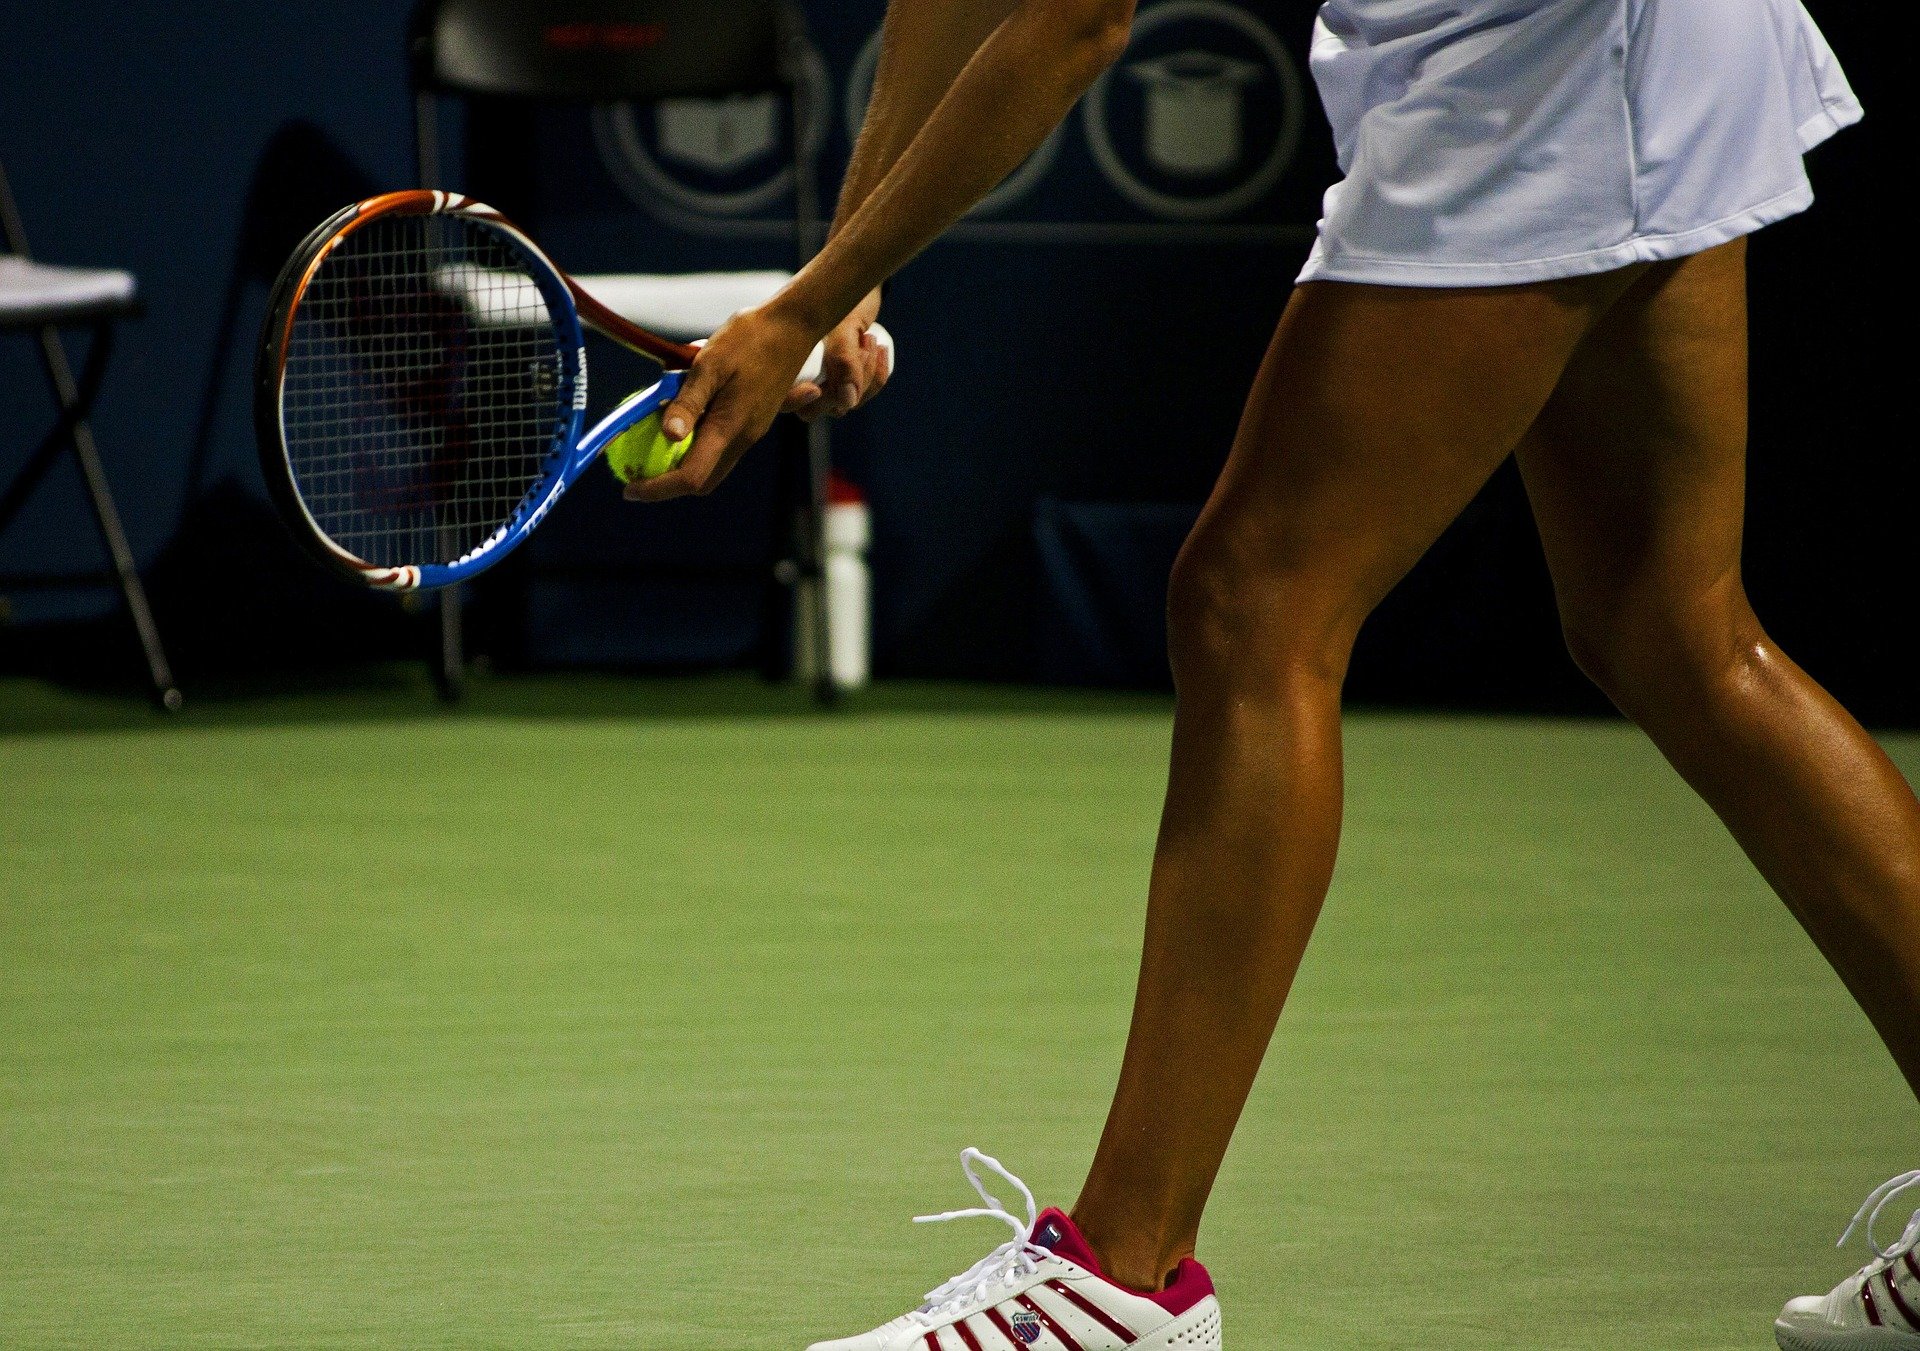 Tennis player lines up serve